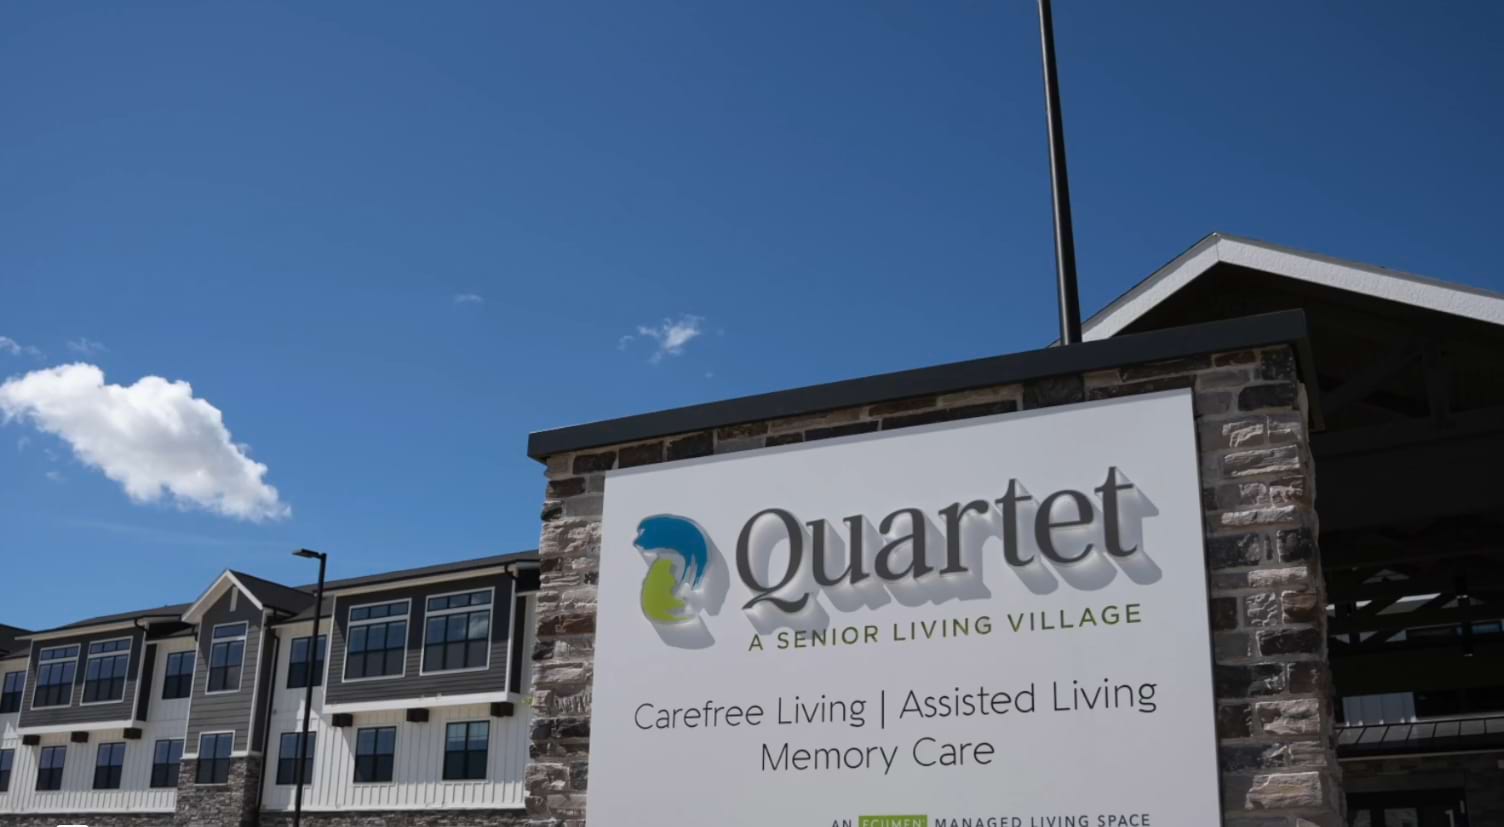 Quartet - A Senior Living Village